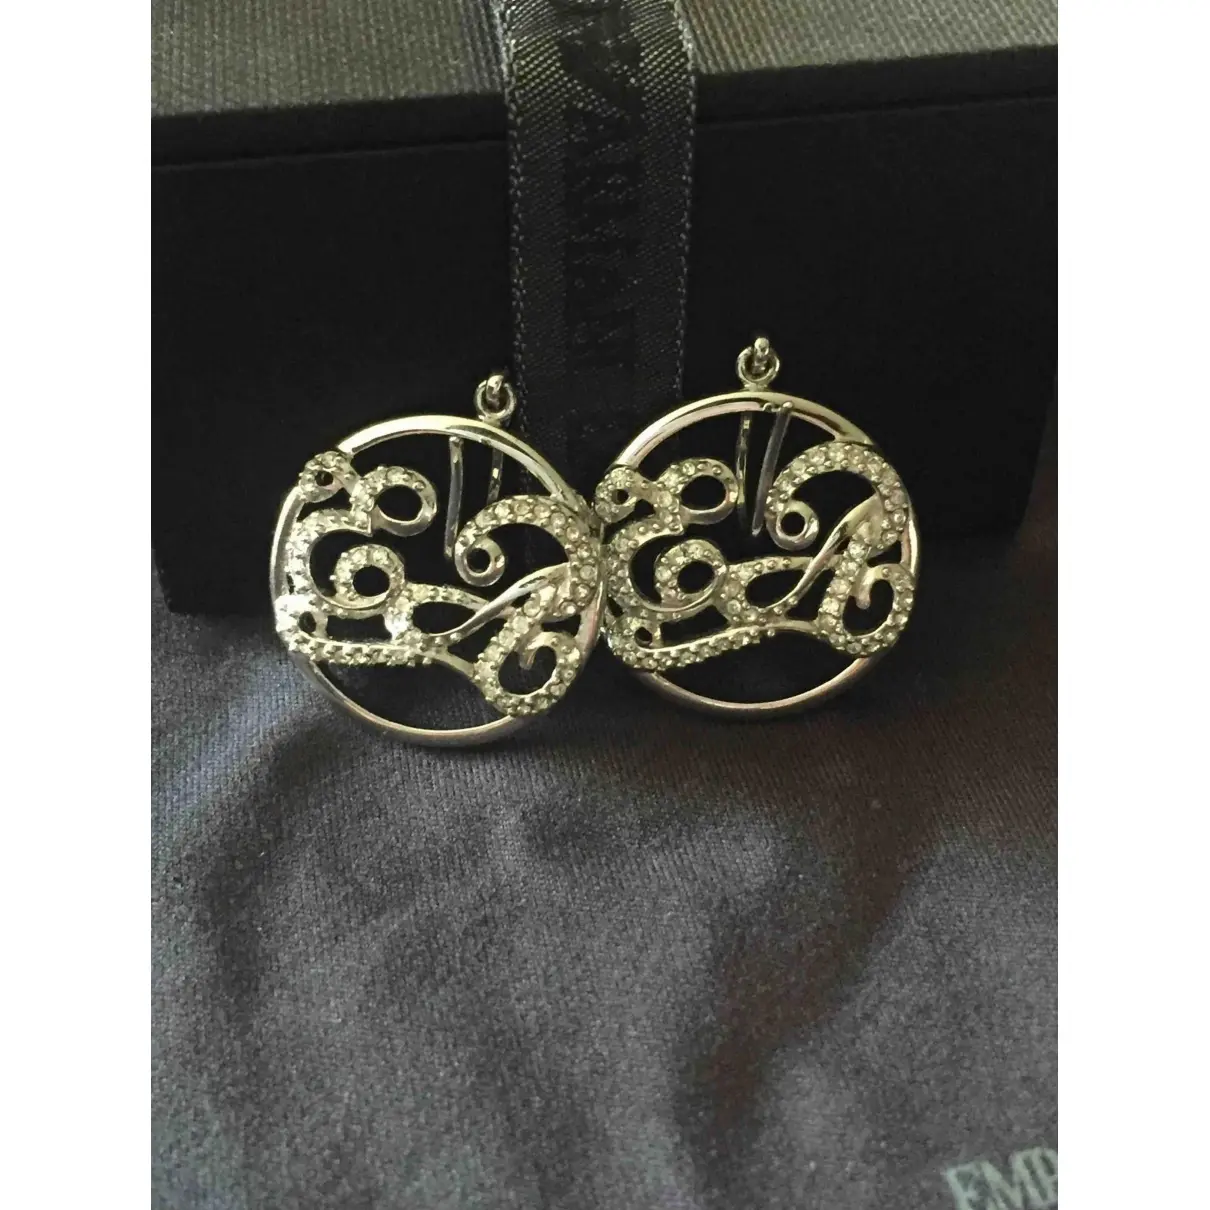 Emporio Armani Silver earrings for sale